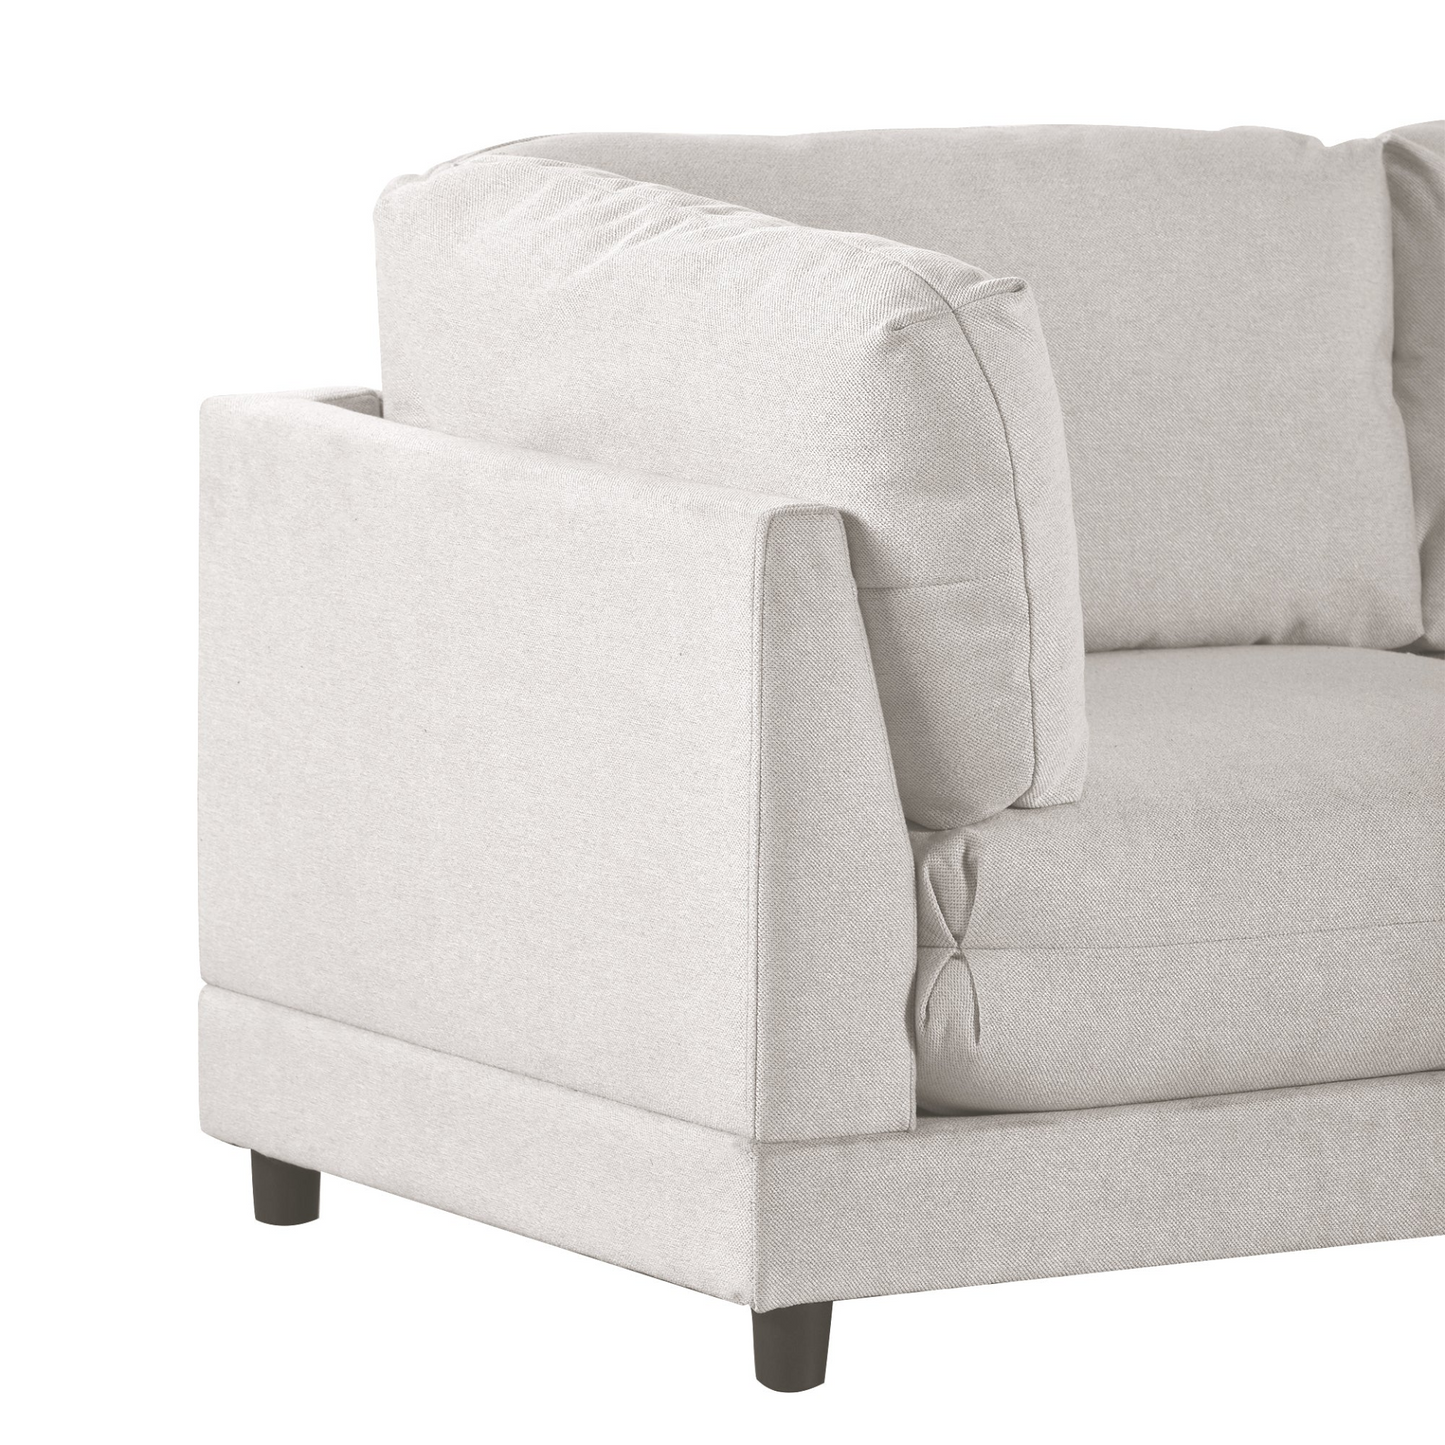 Beige Modern L-Shaped Sofa Set